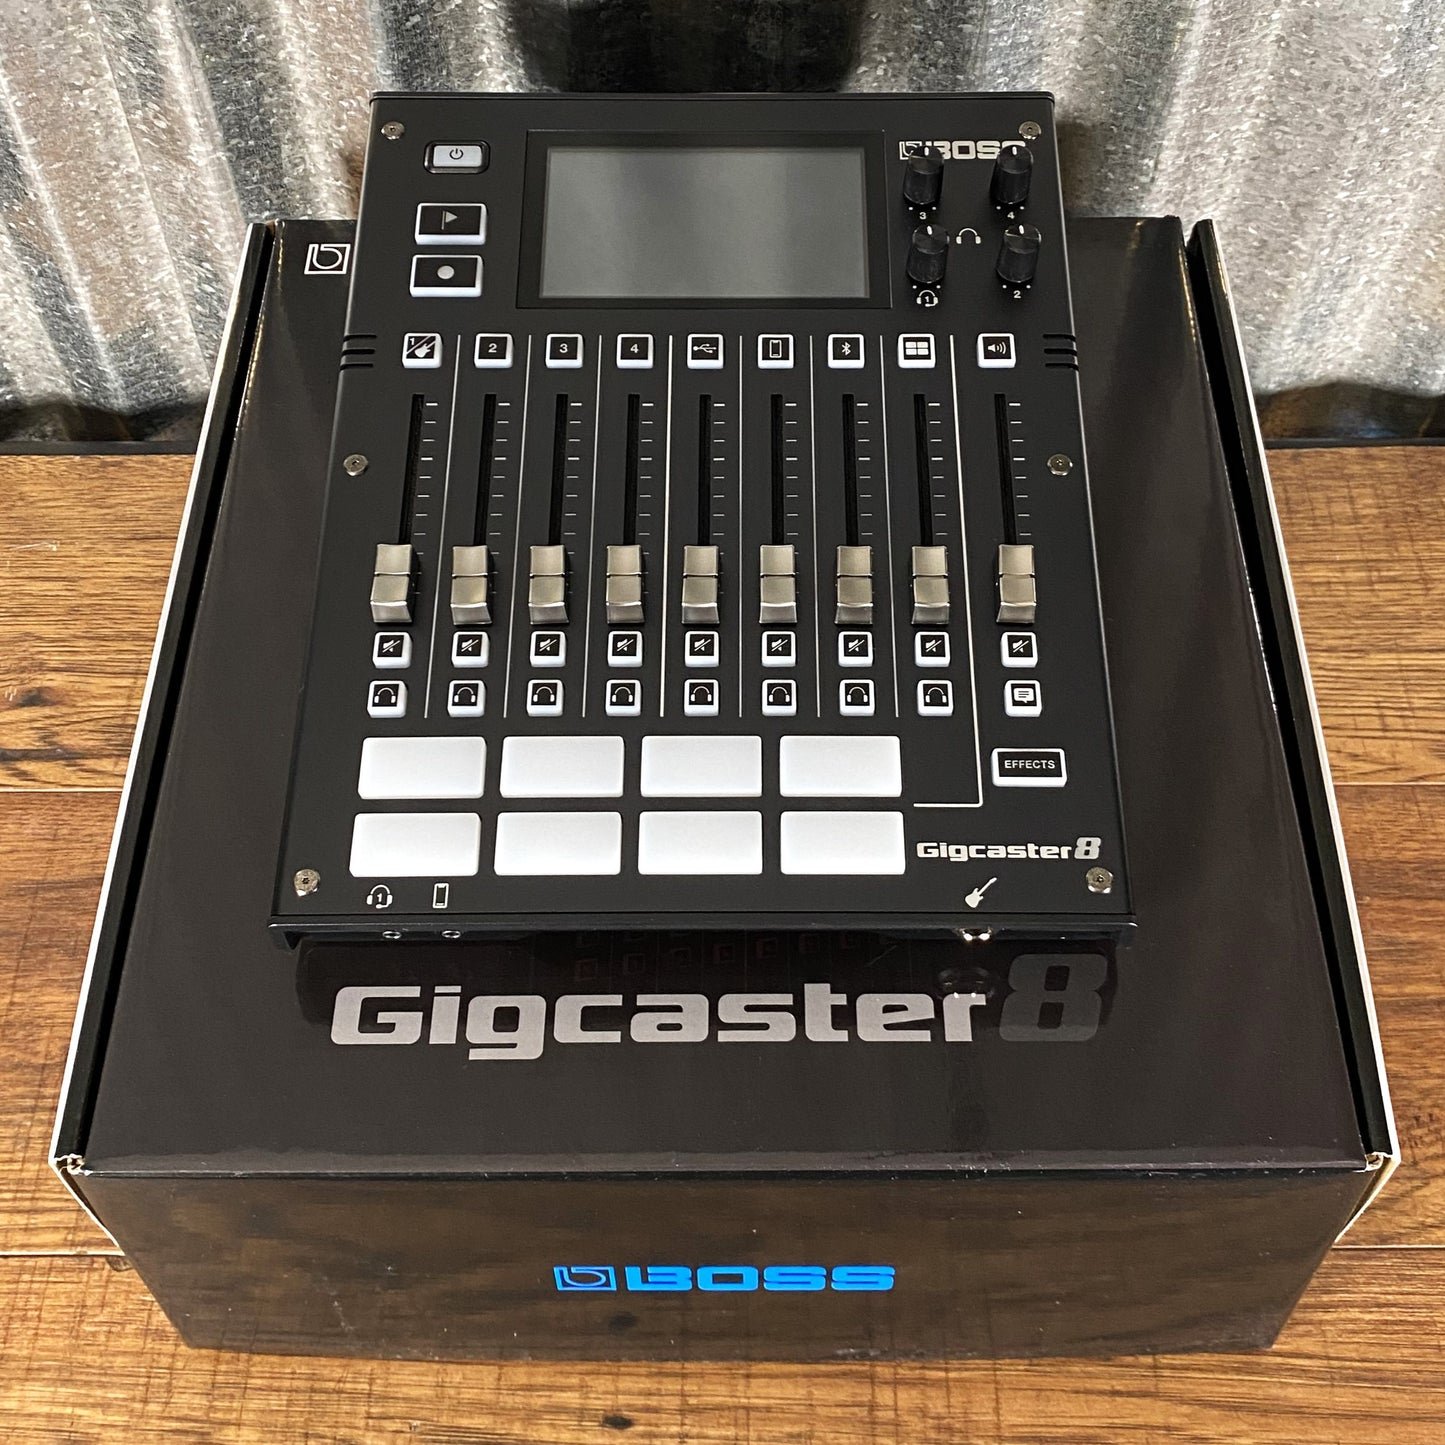 Boss GCS-8 Gigcaster 8 Live Streaming Mixer Recording Interface